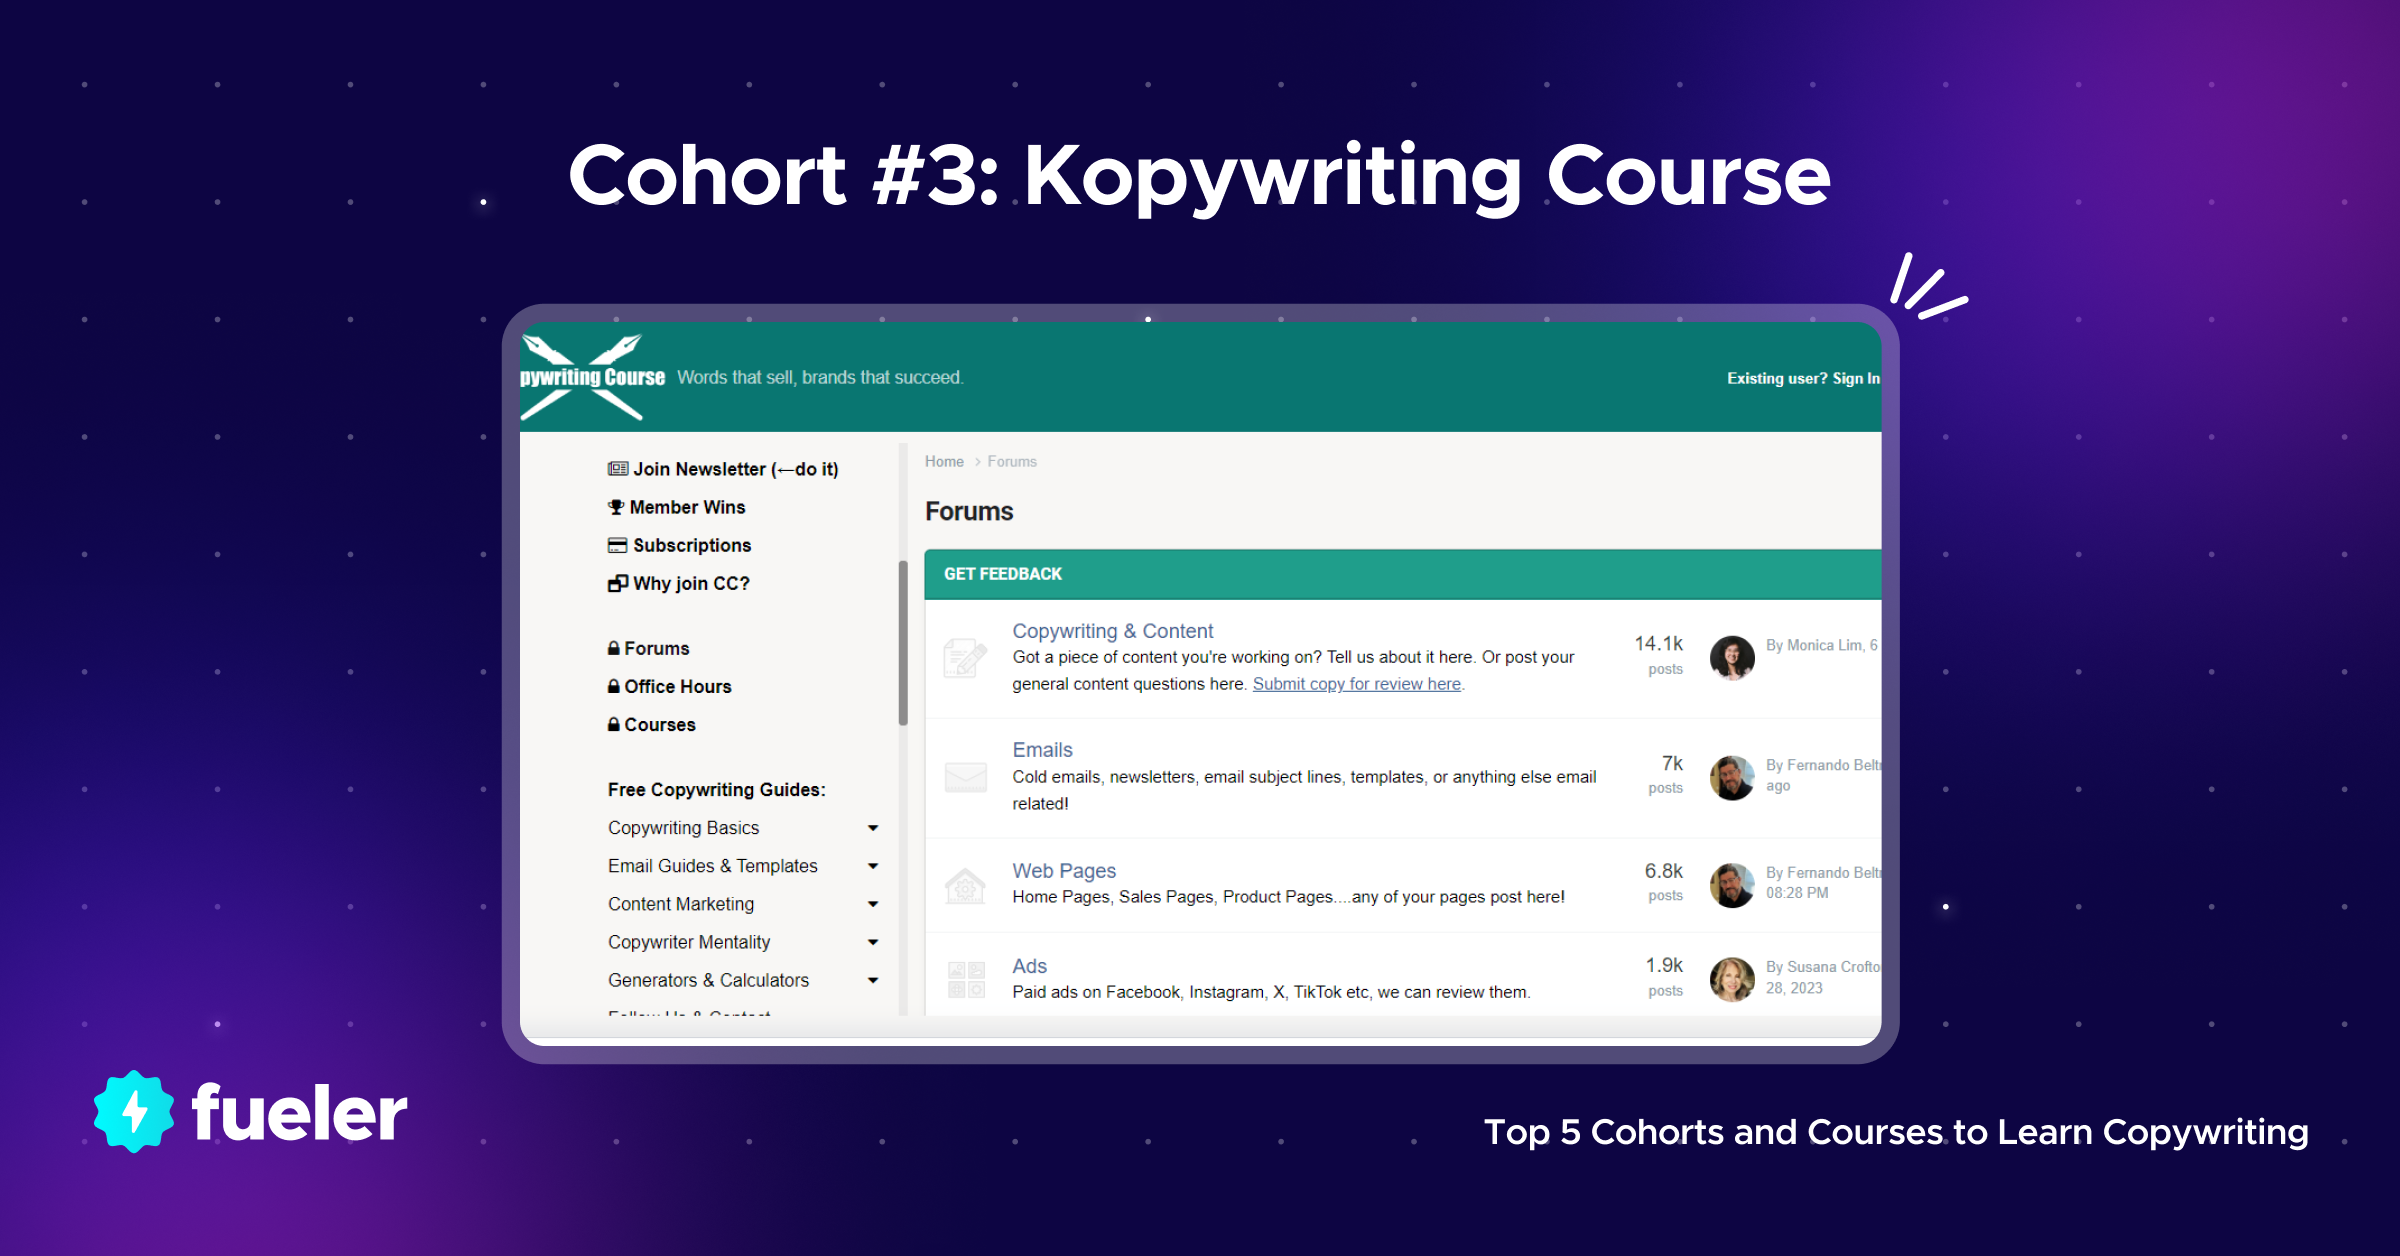 Kopywriting Course